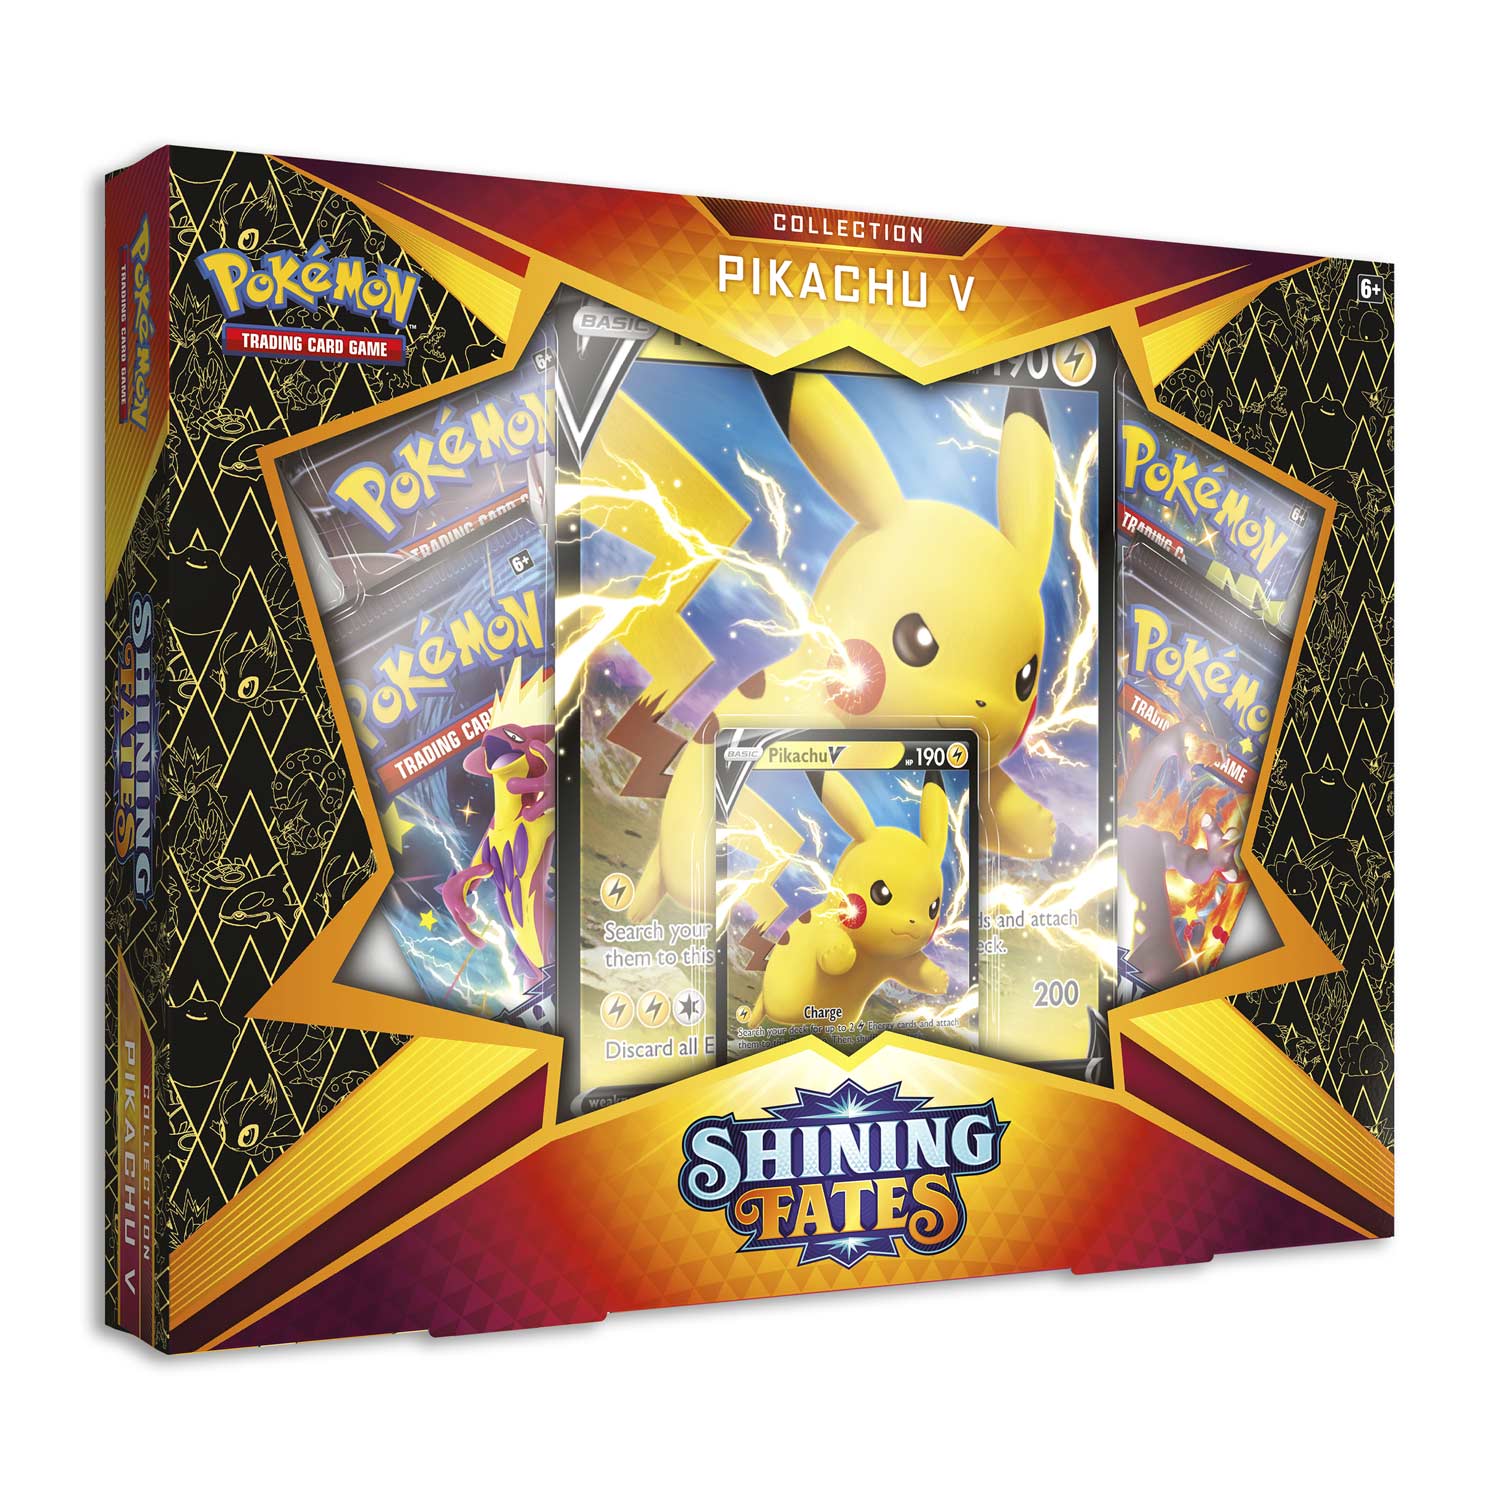 Pokémon TCG Shining Fates Pikachu V Collection Box Set for sale online 